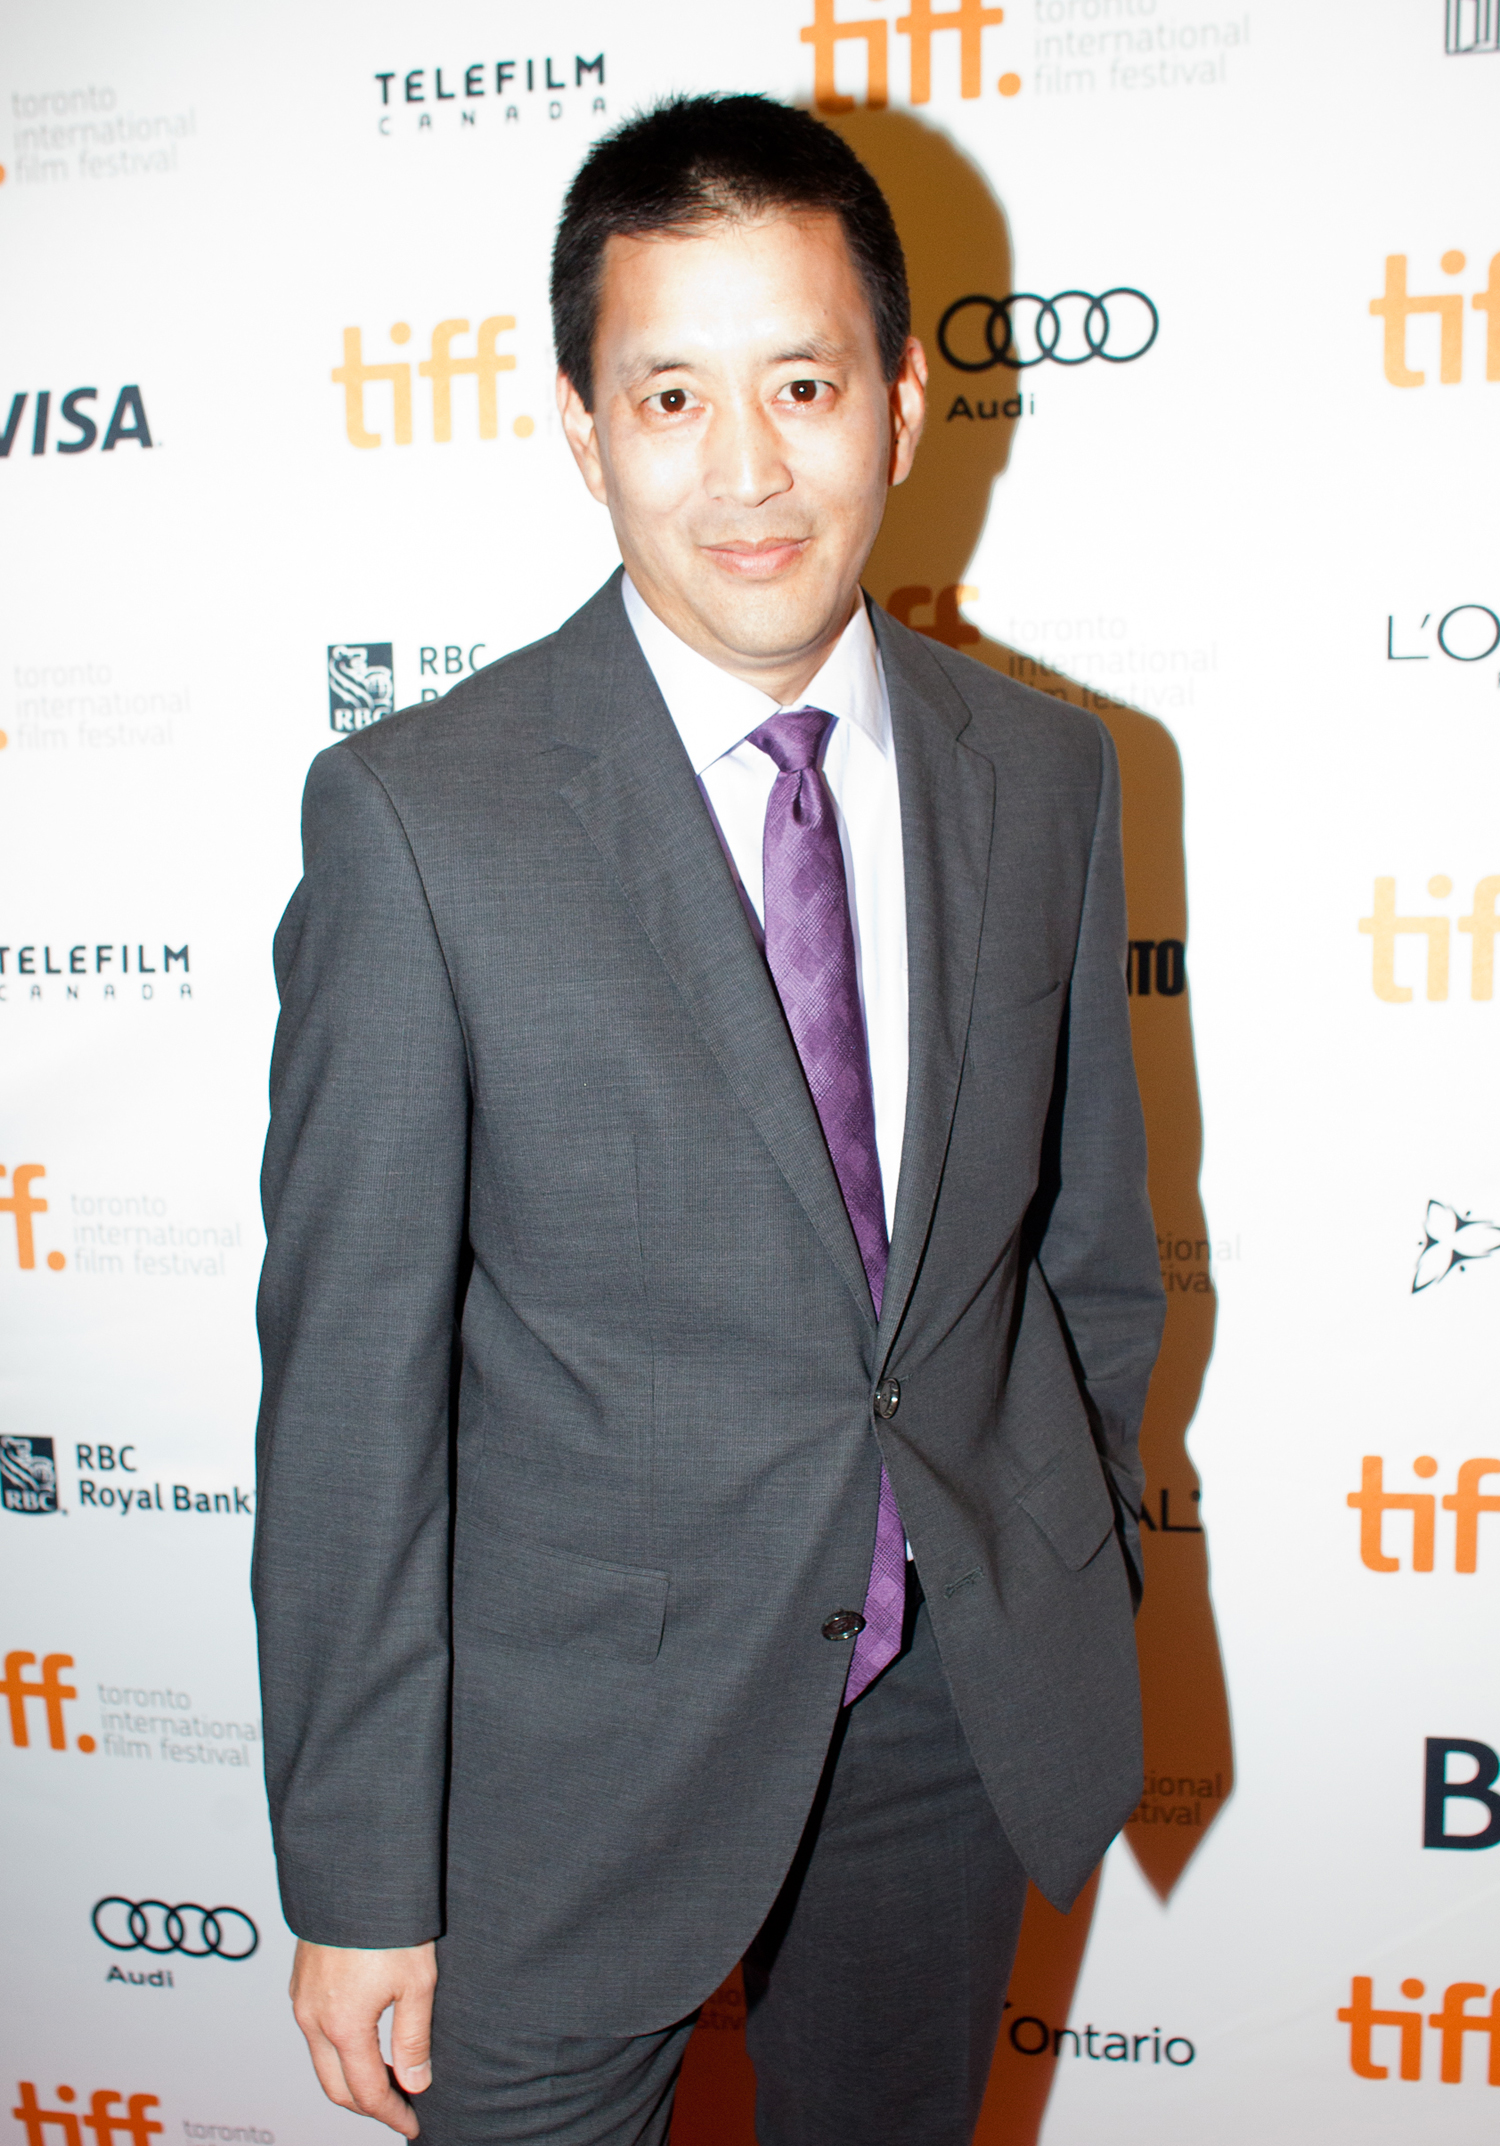 Scott Takeda walks the red carpet for DALLAS BUYERS CLUB at the 2013 Toronto International Film Festival.